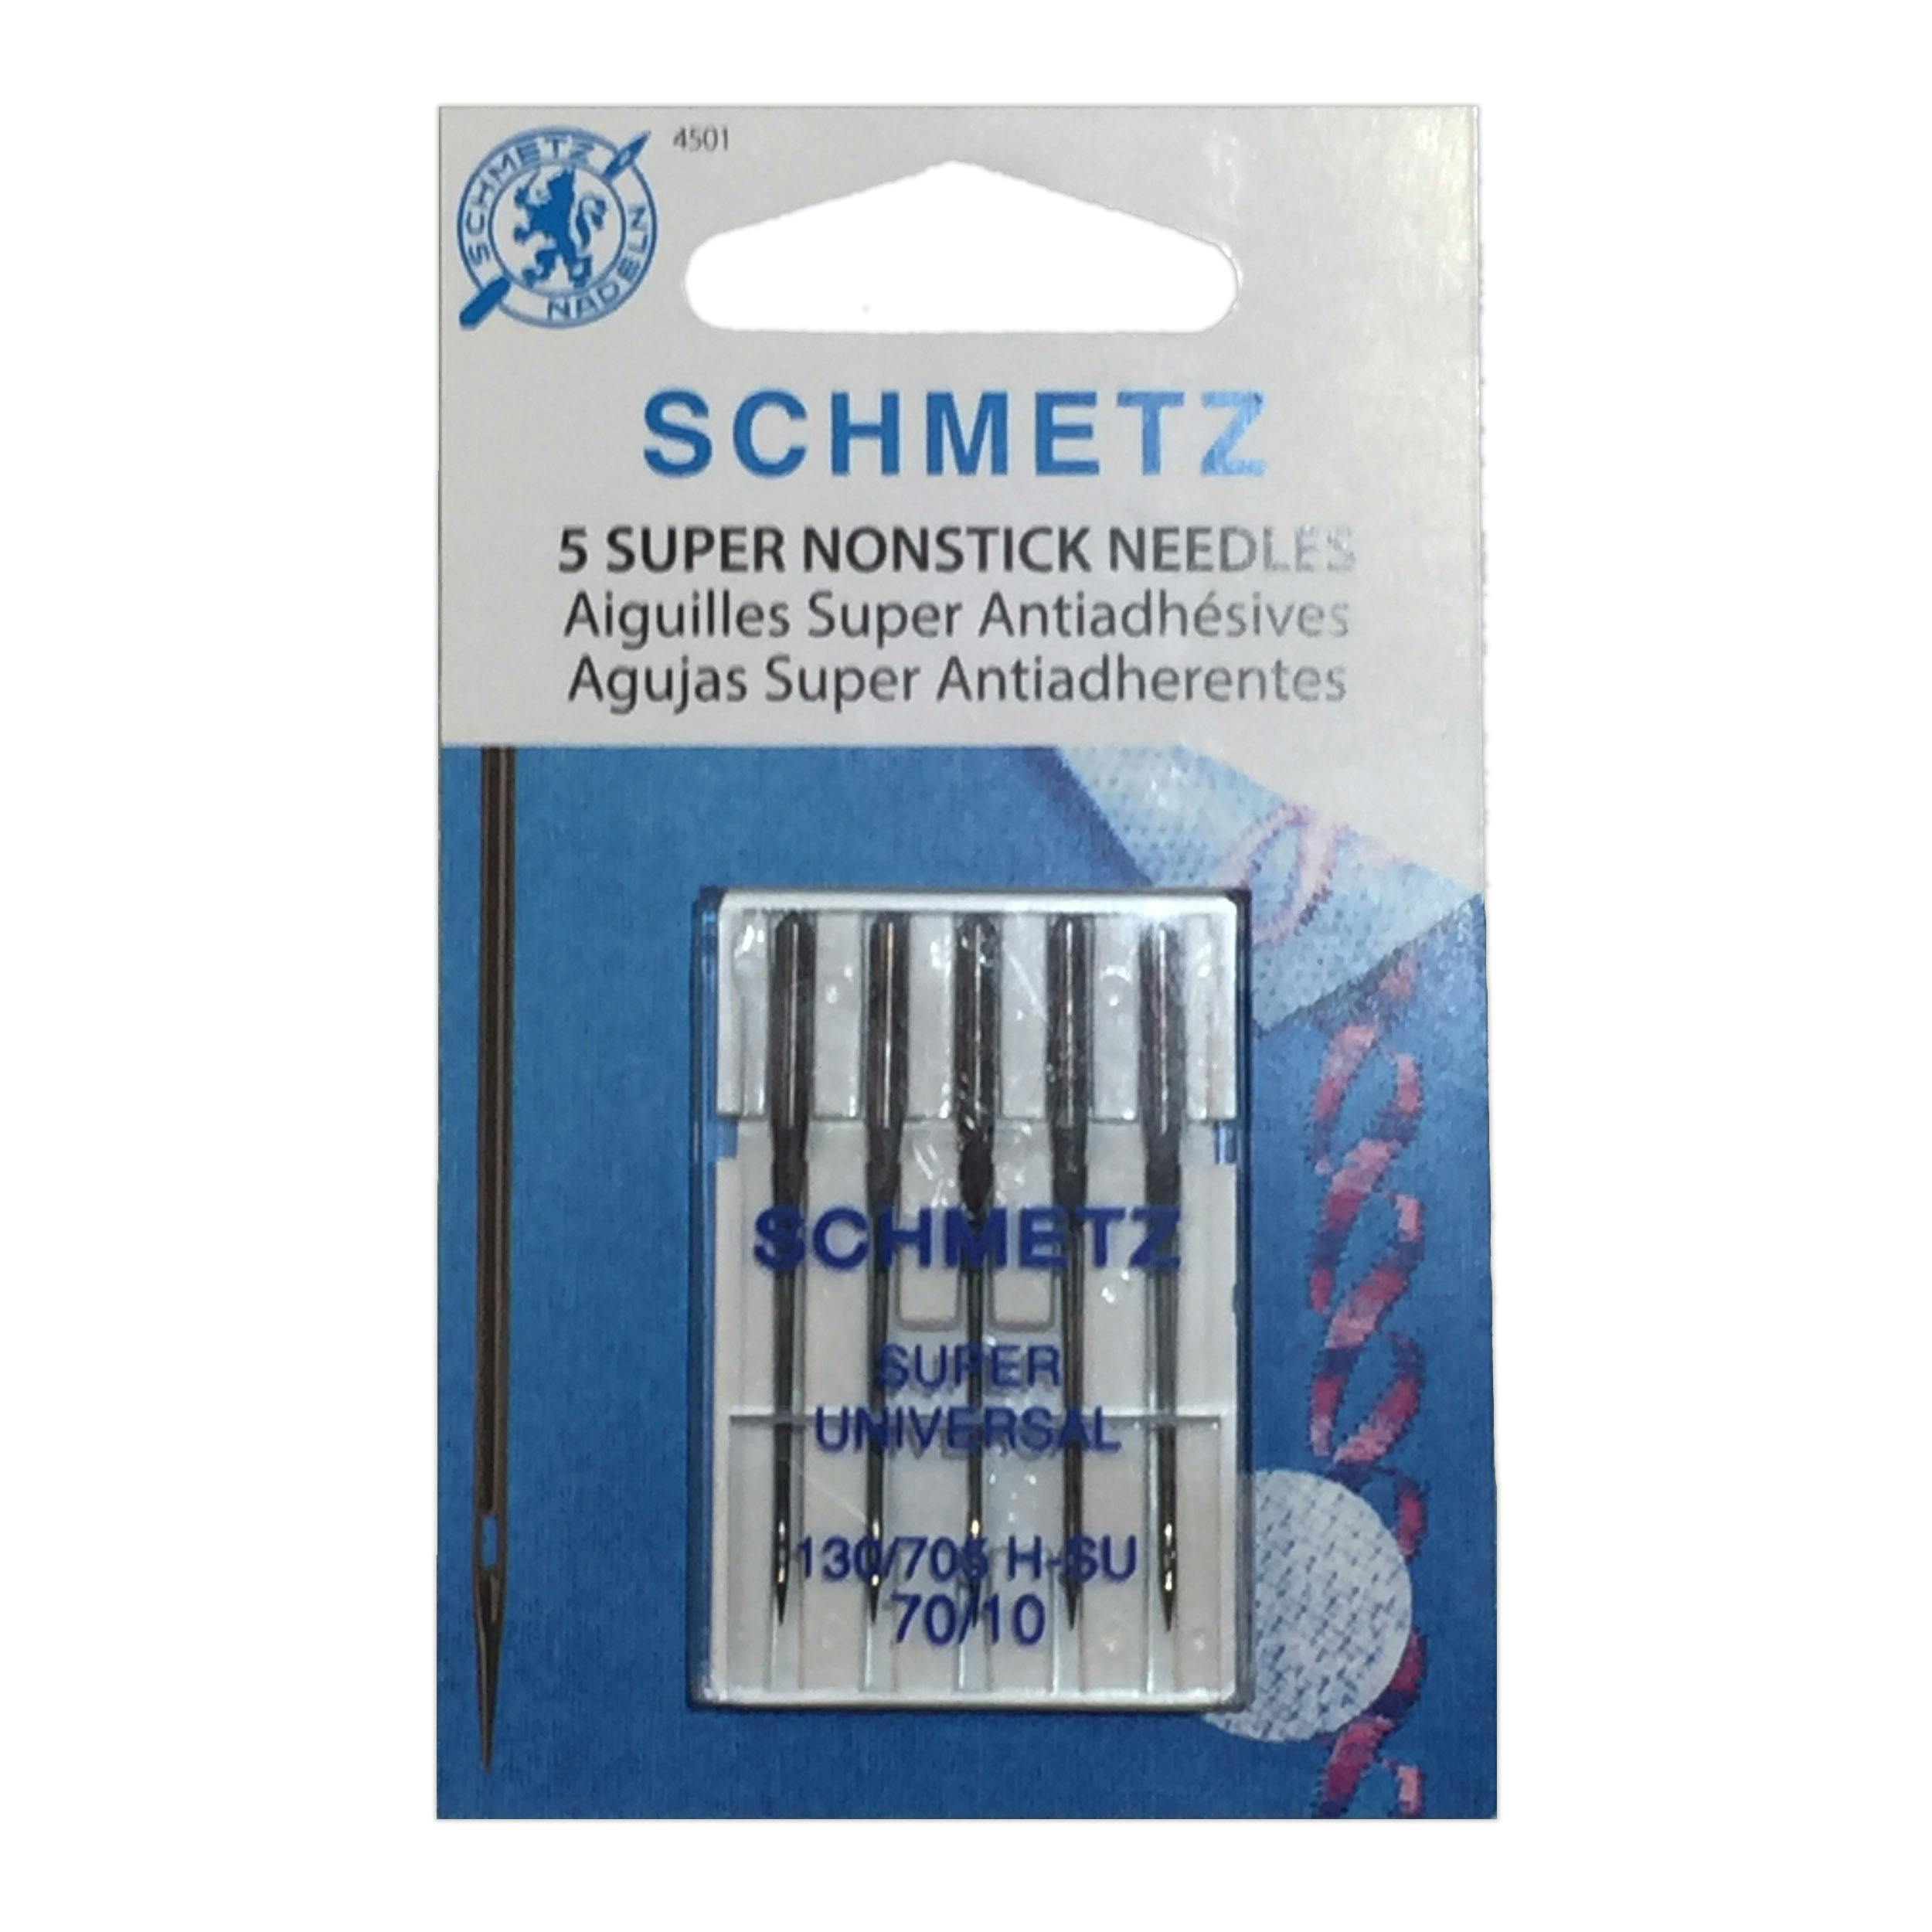 Schmetz Super Non-Stick Needles (Size 80/12 or 90/14) - 1000's of